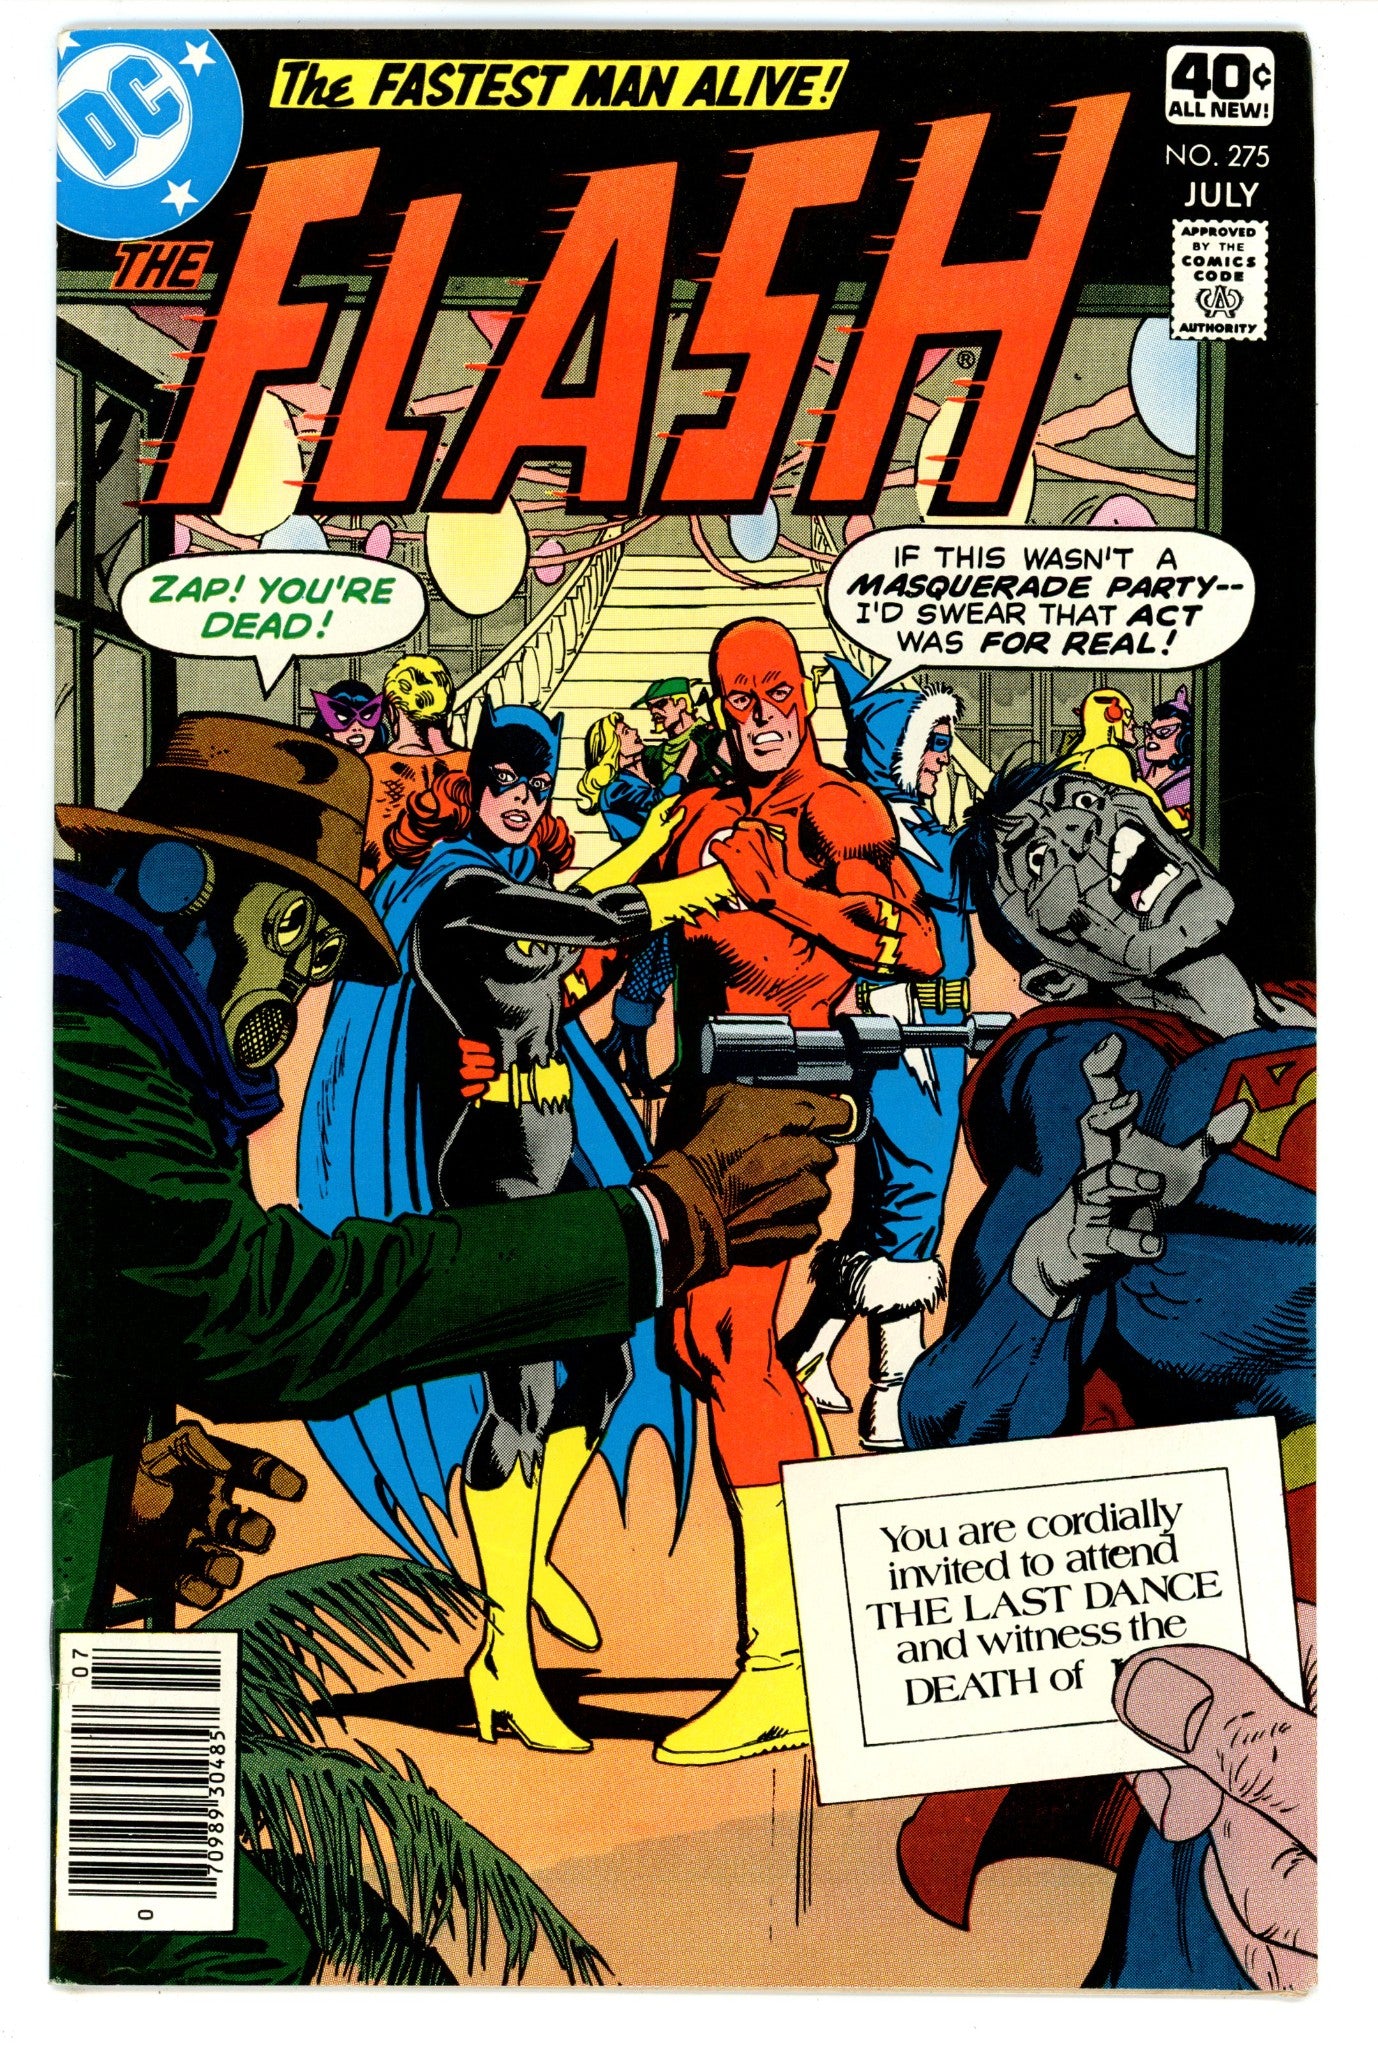 The Flash Vol 1 275 FN (6.0) (1979) 